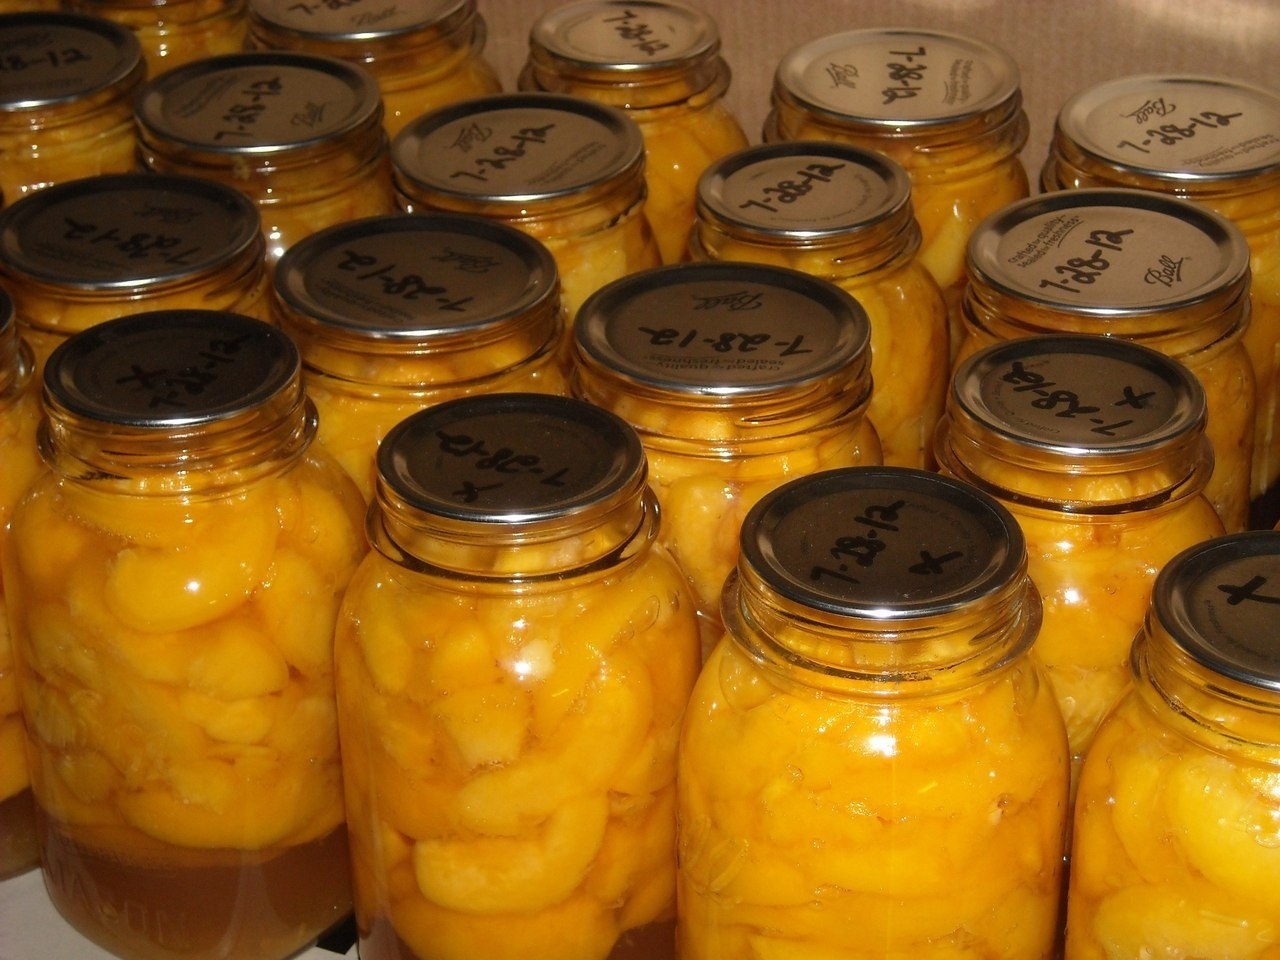 Кабачки под ананасы на зиму: рецепты заготовок